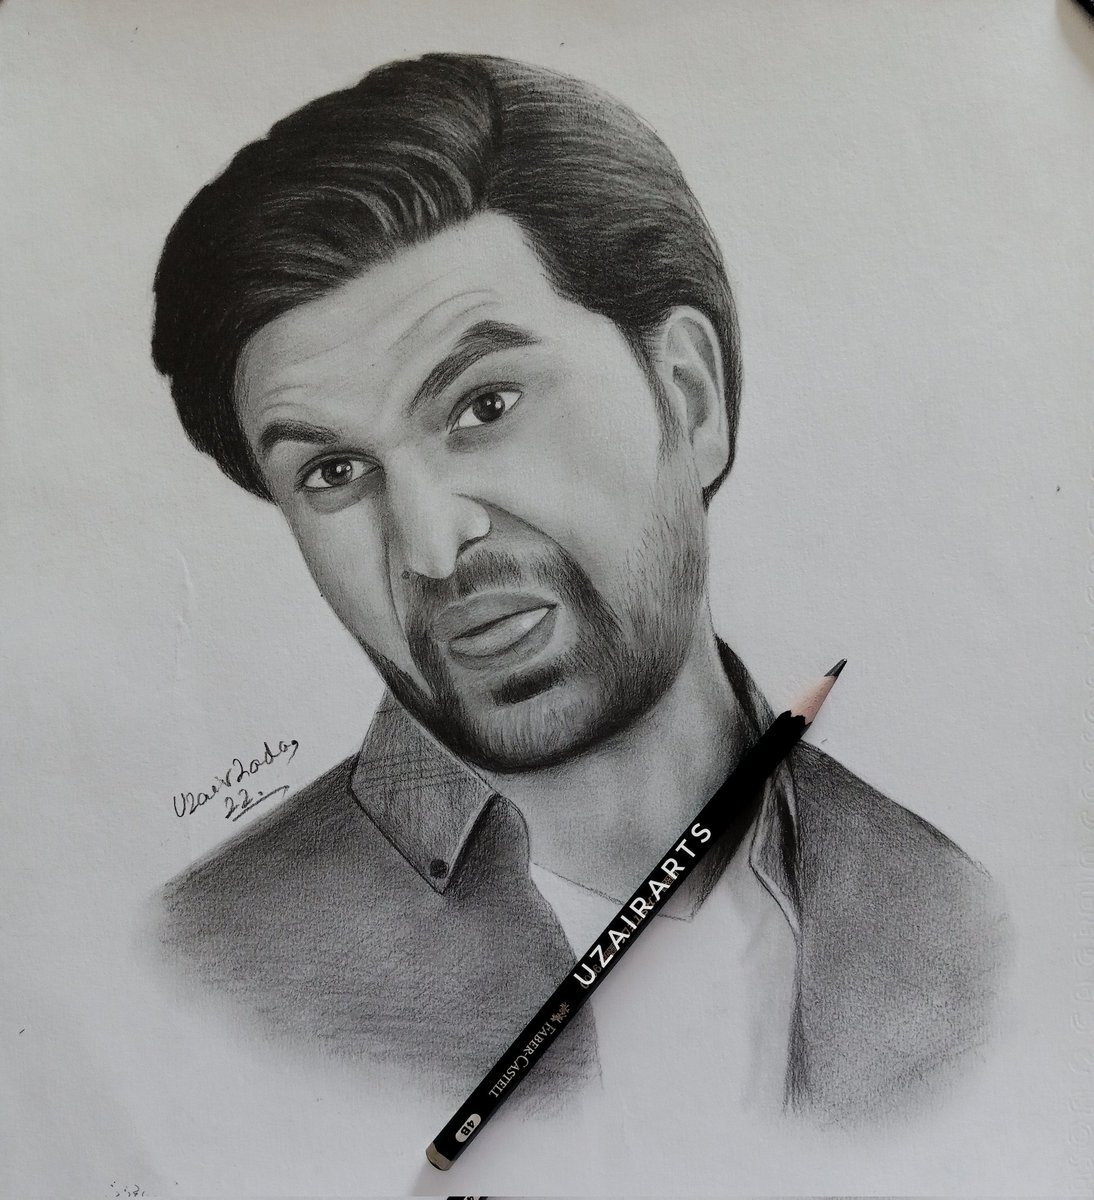 Adam 🤪🤲 drawing by me 
#HumTum #humtv #AhadRaza #RamshaKhan #adamneha